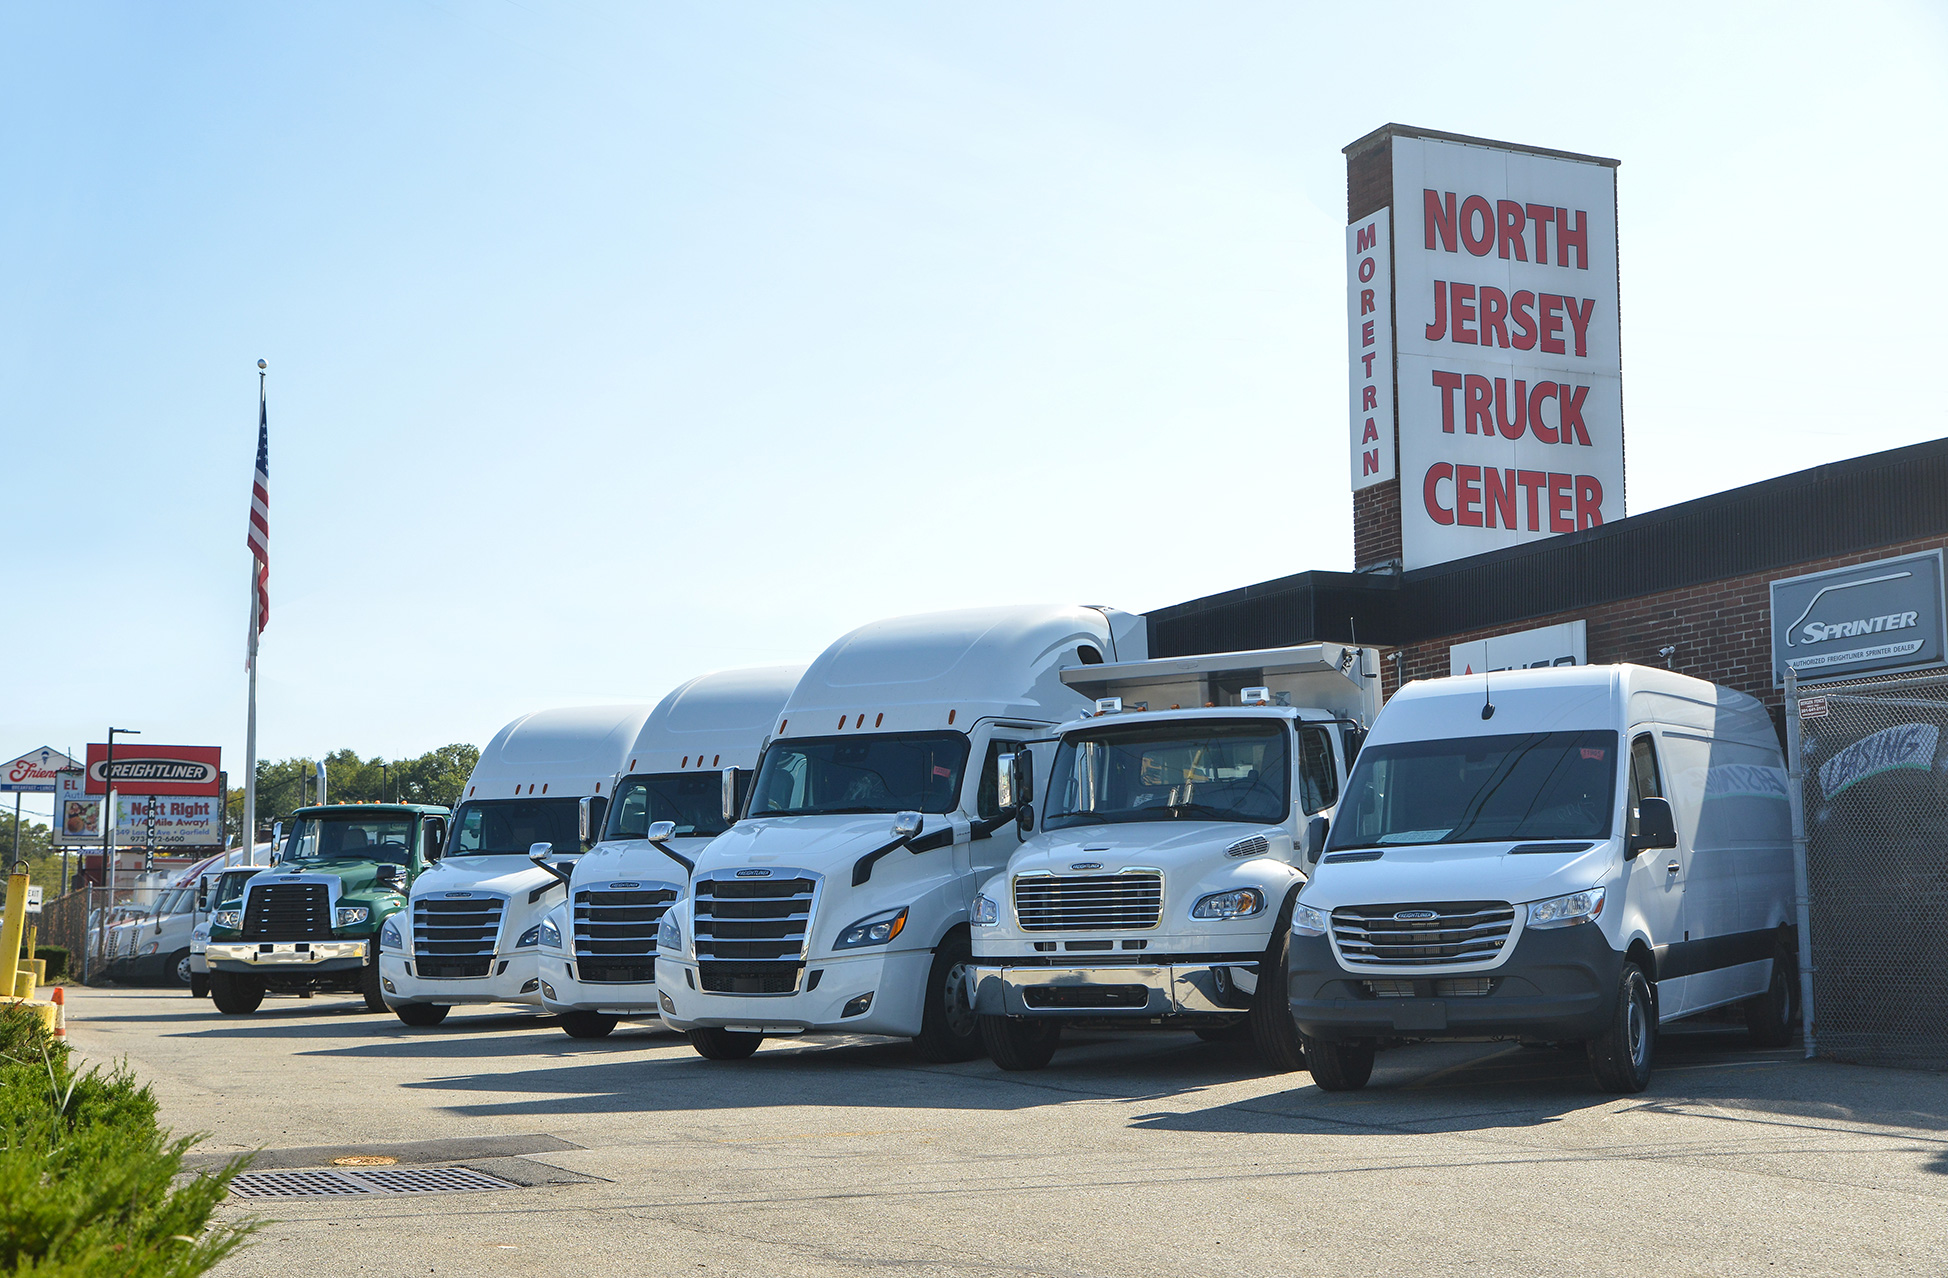 North Jersey Truck Center